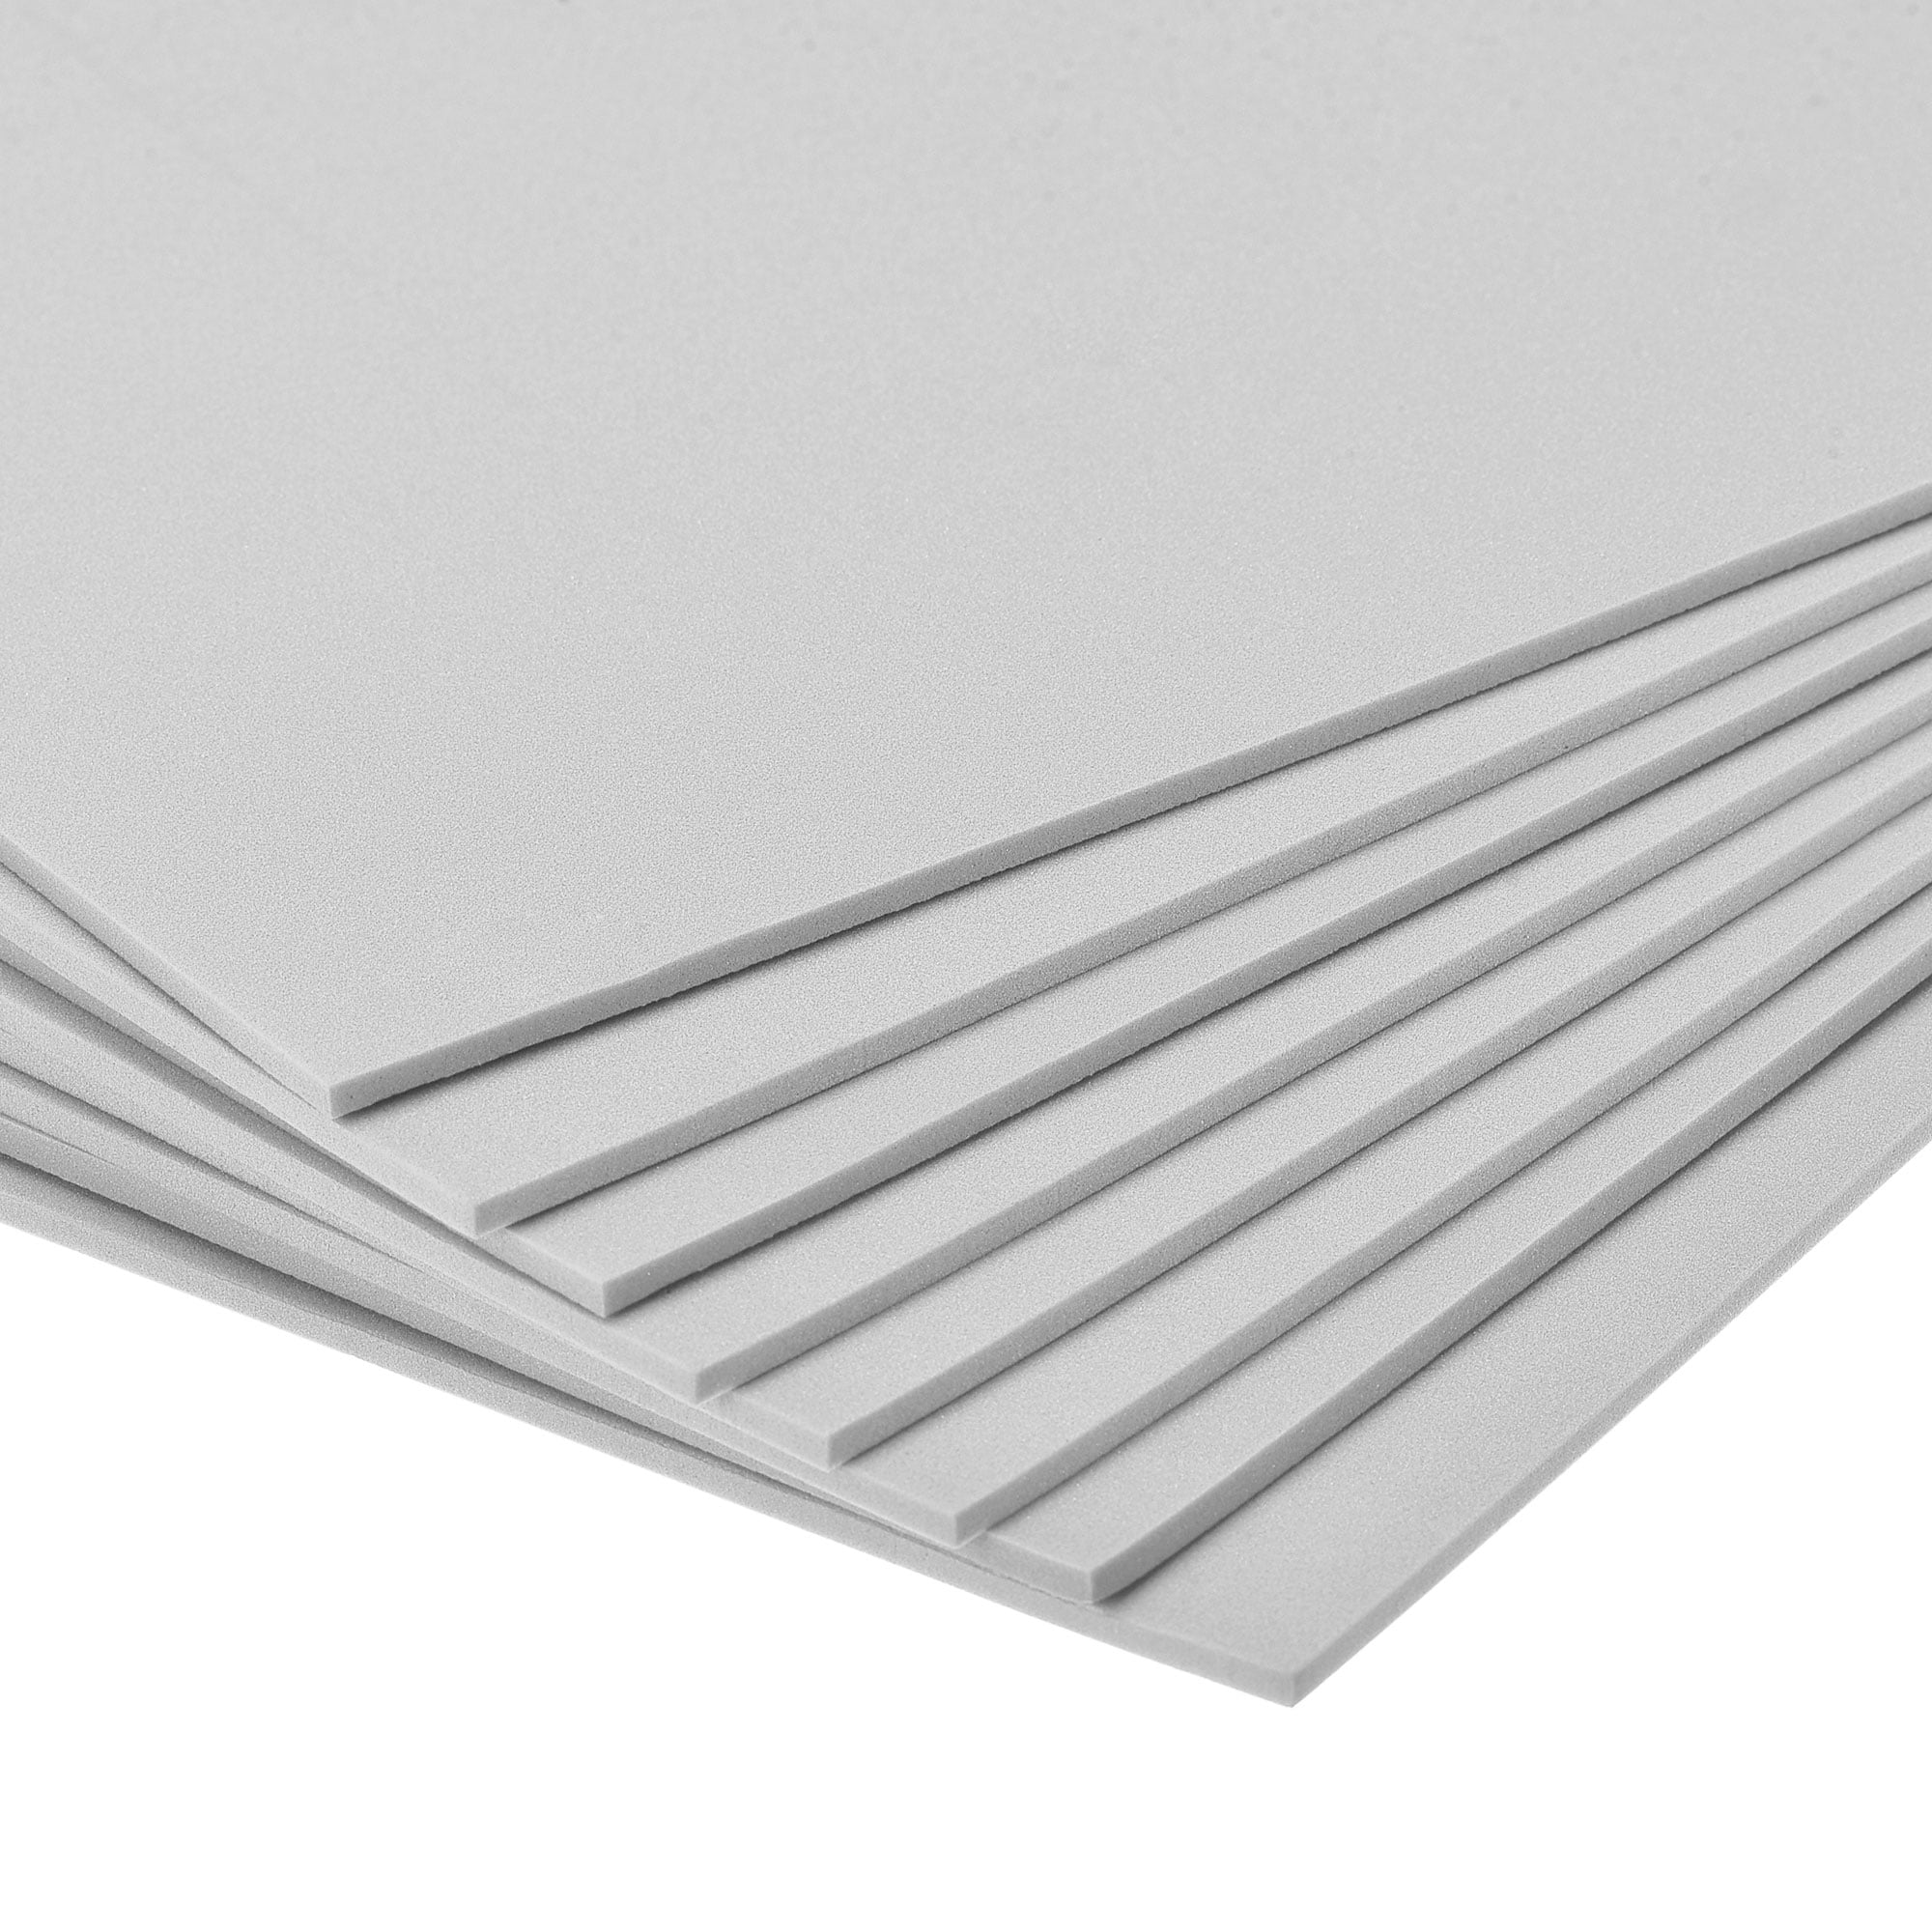 EVA Foam Sheets Light Gray 17.72 x 11.81 Inch 2mm Thickness for DIY, 6 Pcs  